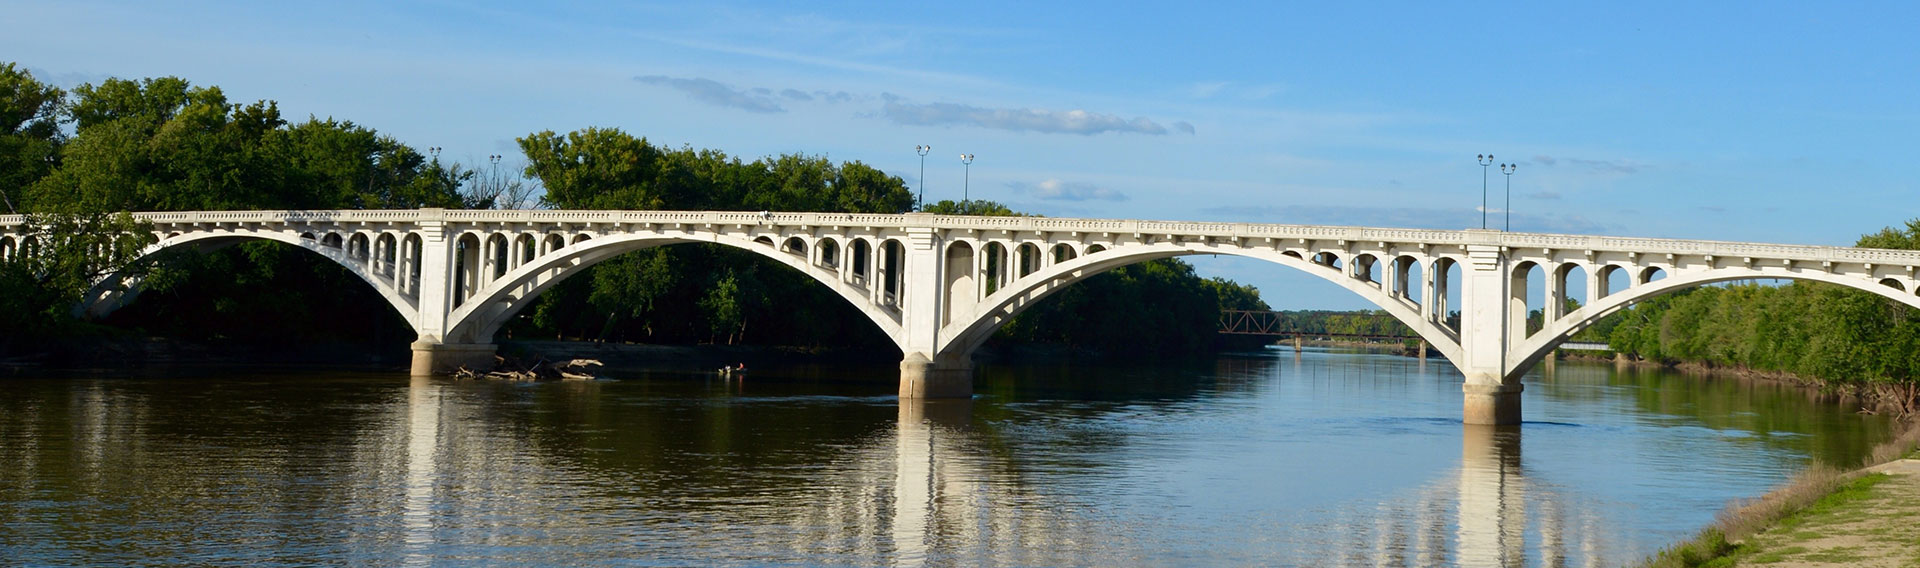 Lincoln Memorial Bridge in Lawrence, Illinois